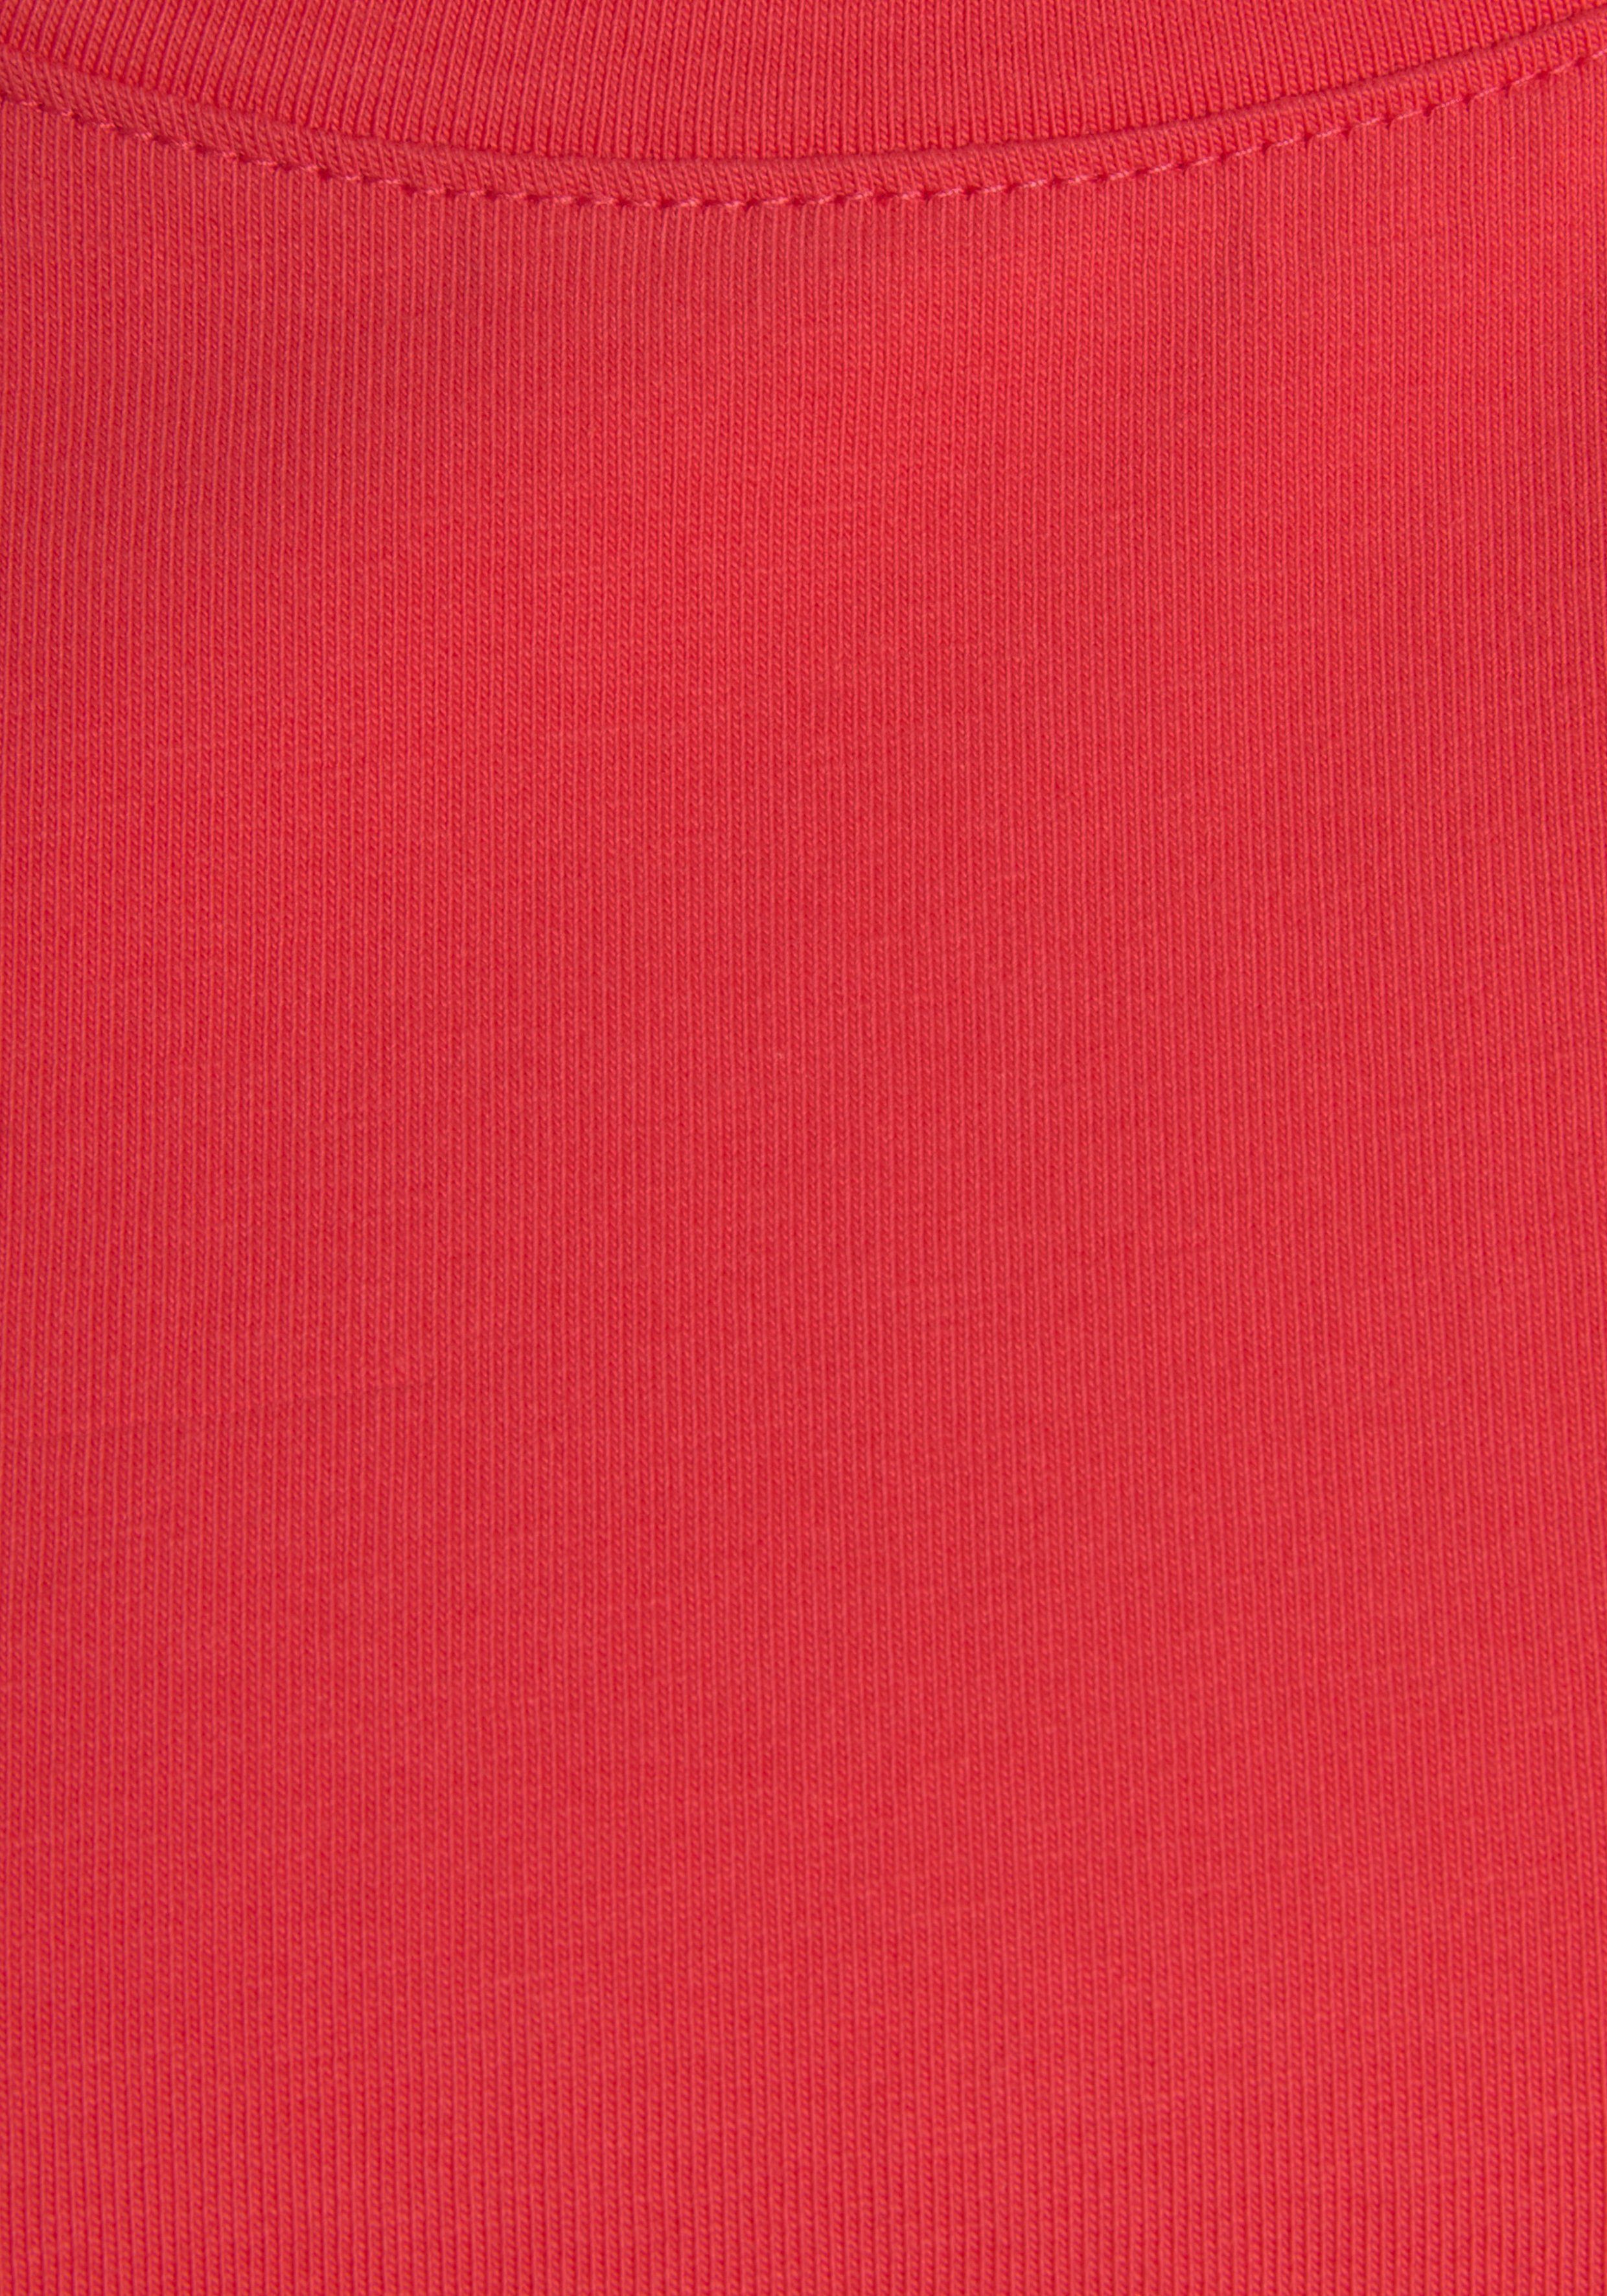 im mit rot Ärmelaufschlag Stil, T-Shirt H.I.S Loungewear maritimen